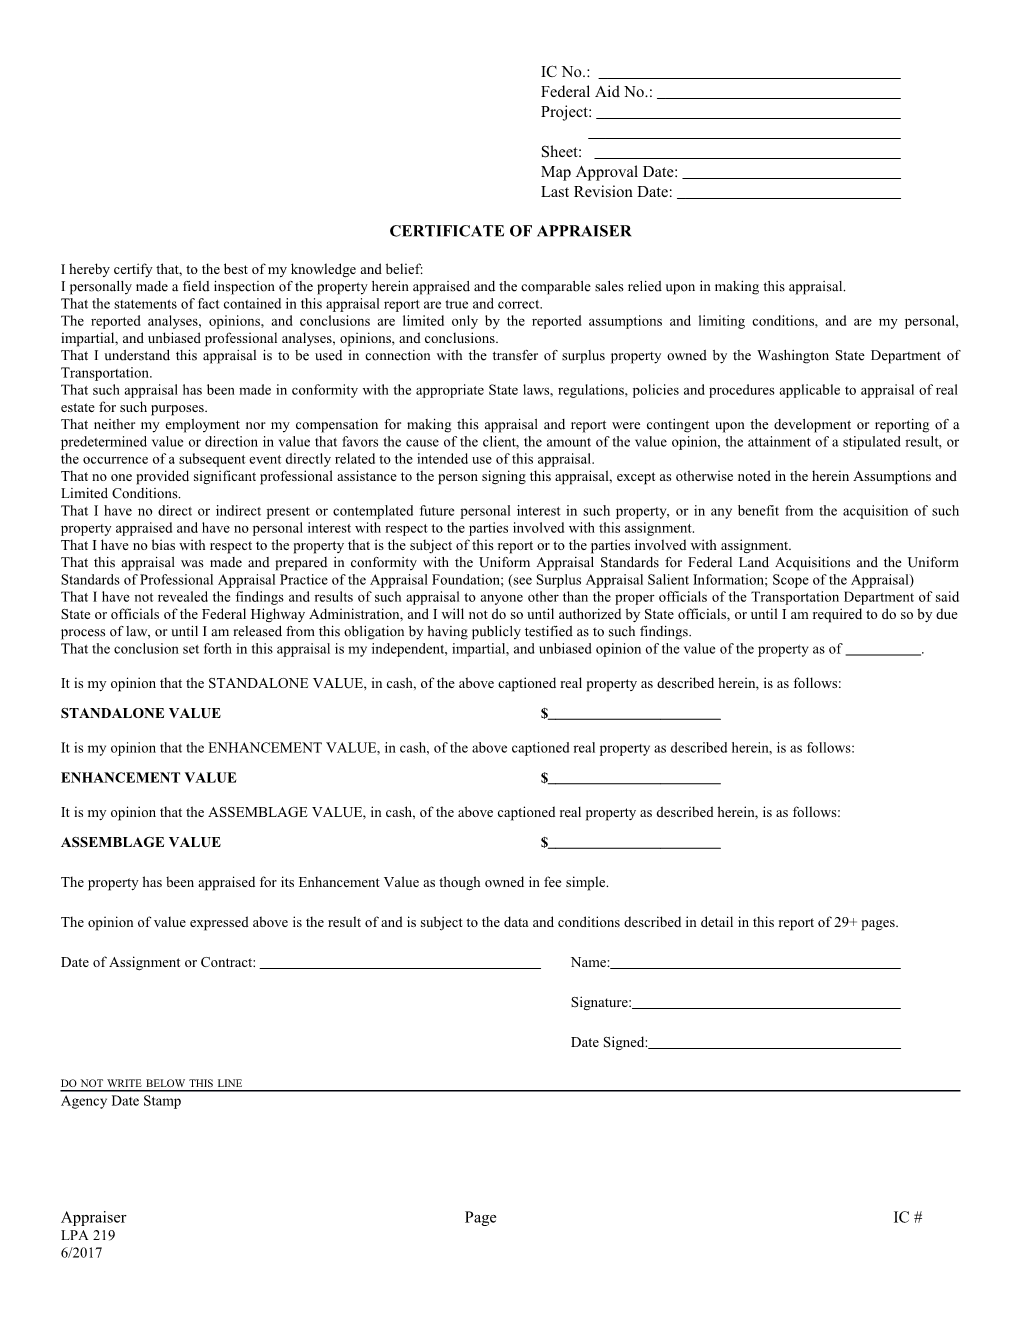 RES 219 WSDOT Surplus Appraisal Form